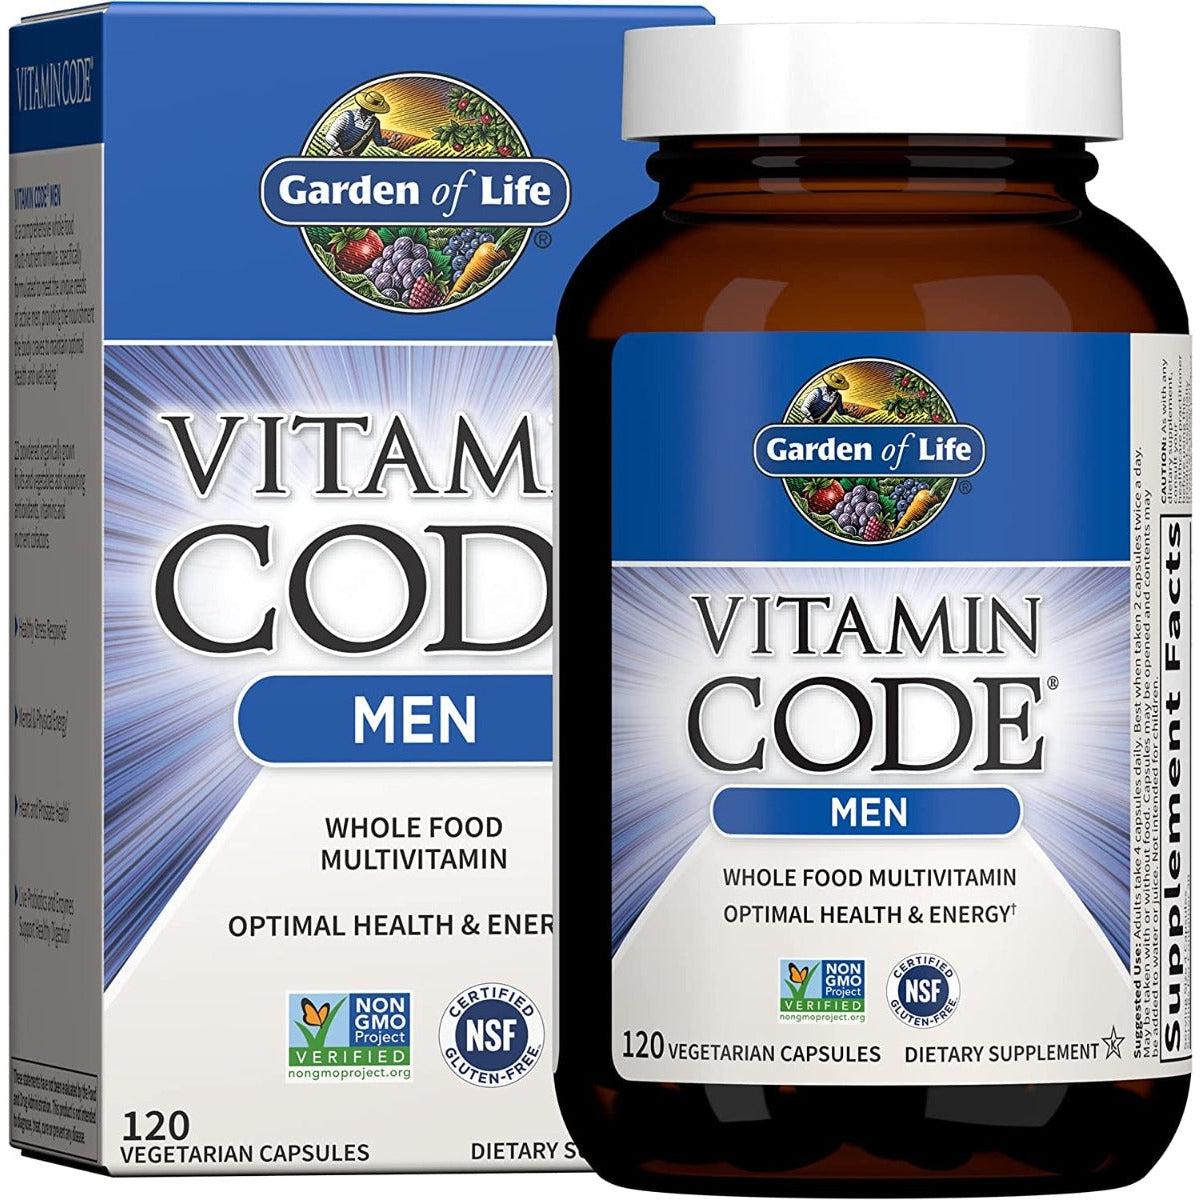 Garden of Life Vitamin Code Whole Food Multivitamin for Men 120 Veh Capsules